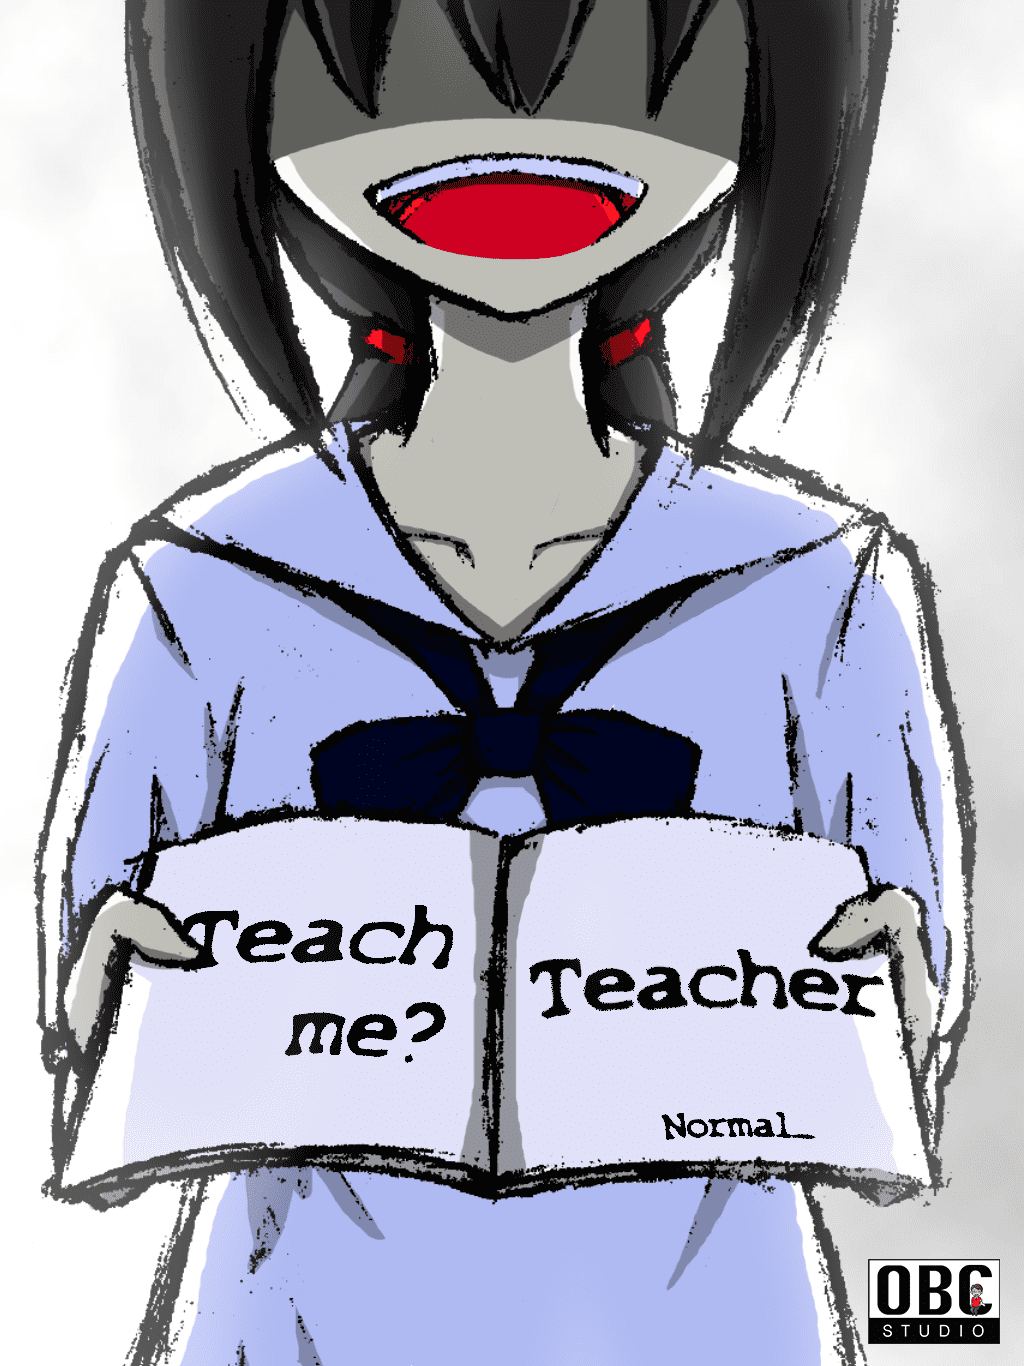 Teach me? Teacher (Ookbee Comics Studio)